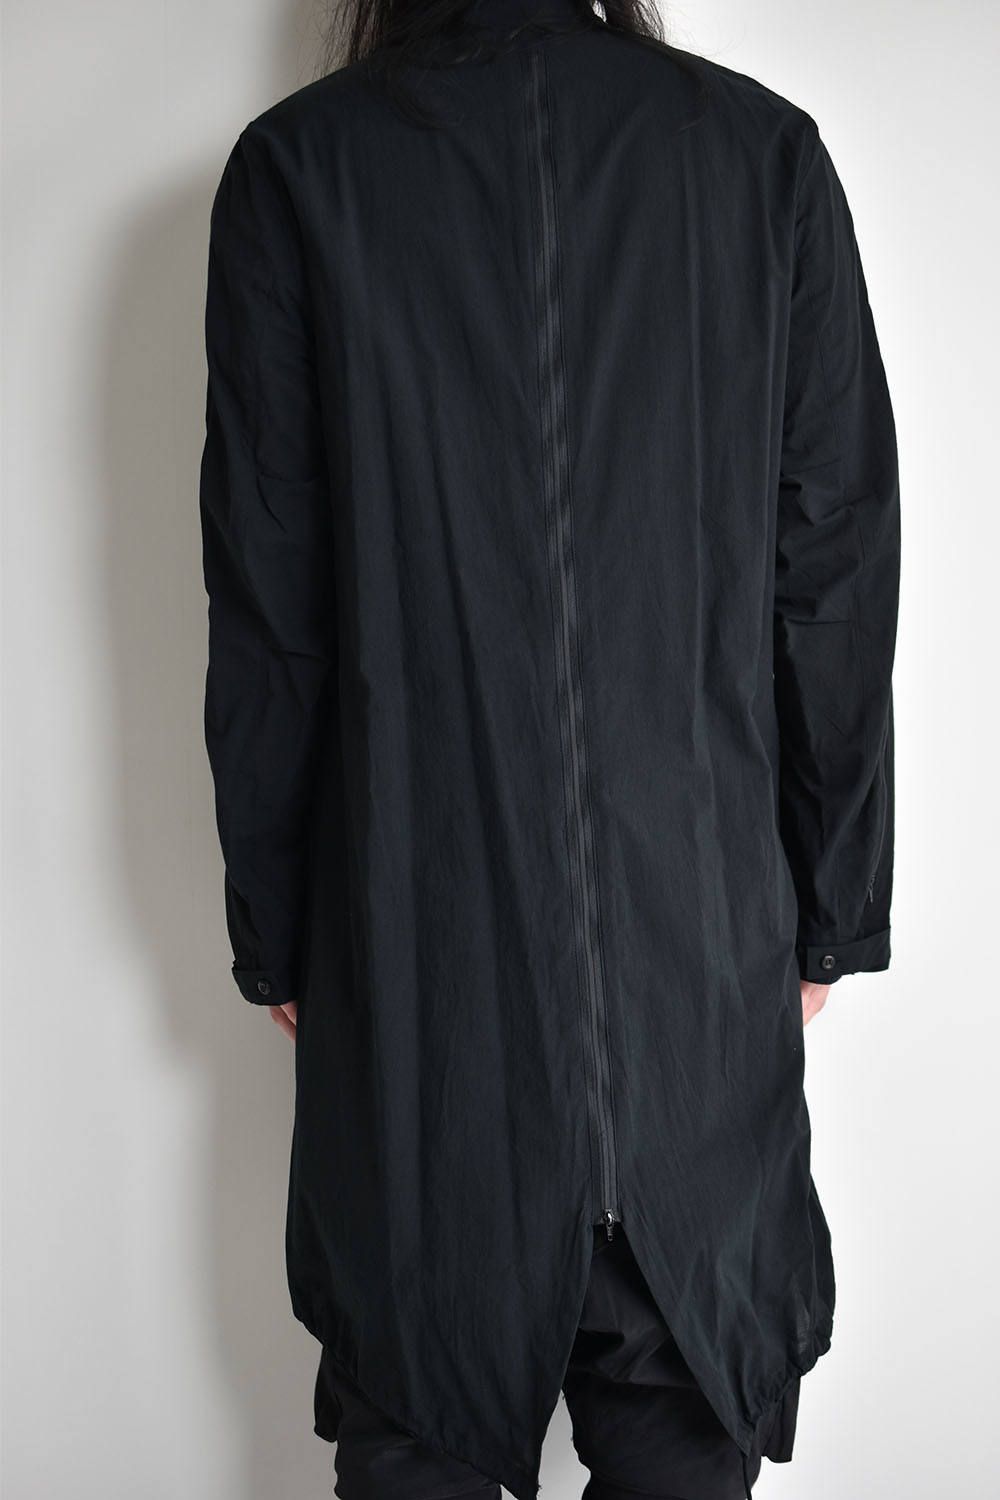 Maulti Zip Long Shirt"Black"/マルチジップロングシャツ"ブラック"